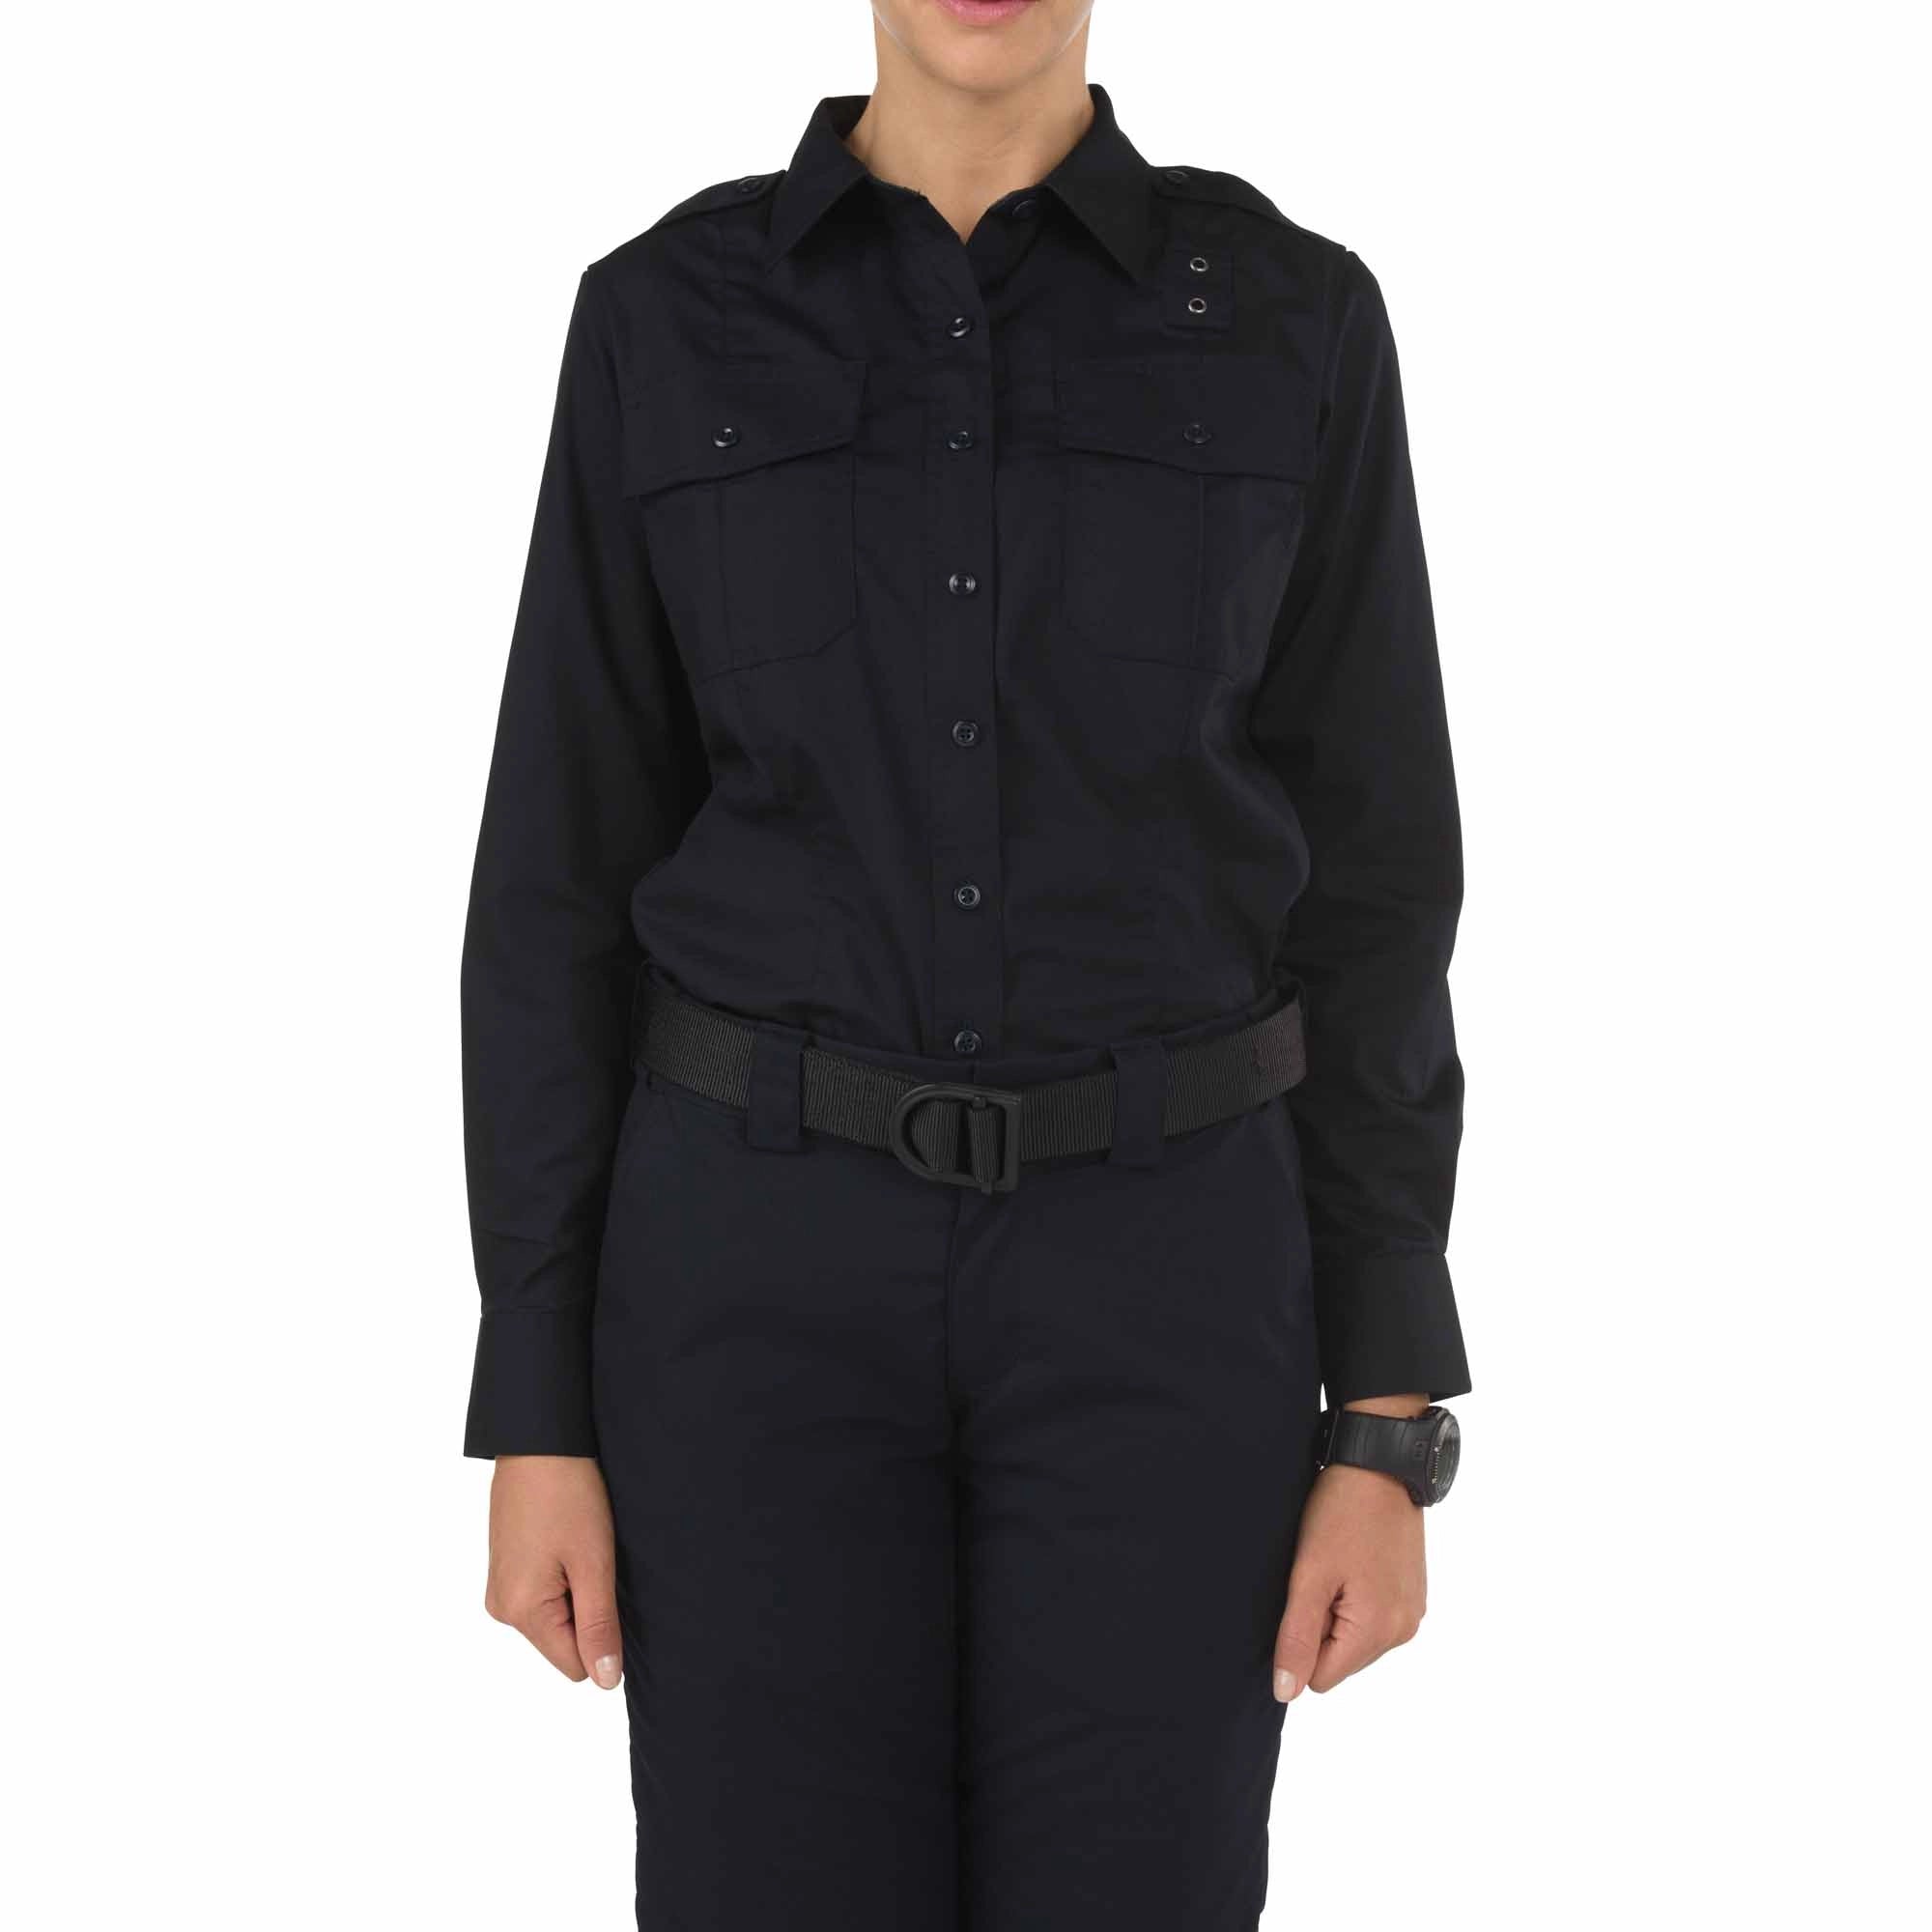 5.11 Tactical Women's Class A Taclite PDU Shirt 62365 - Clothing & Accessories